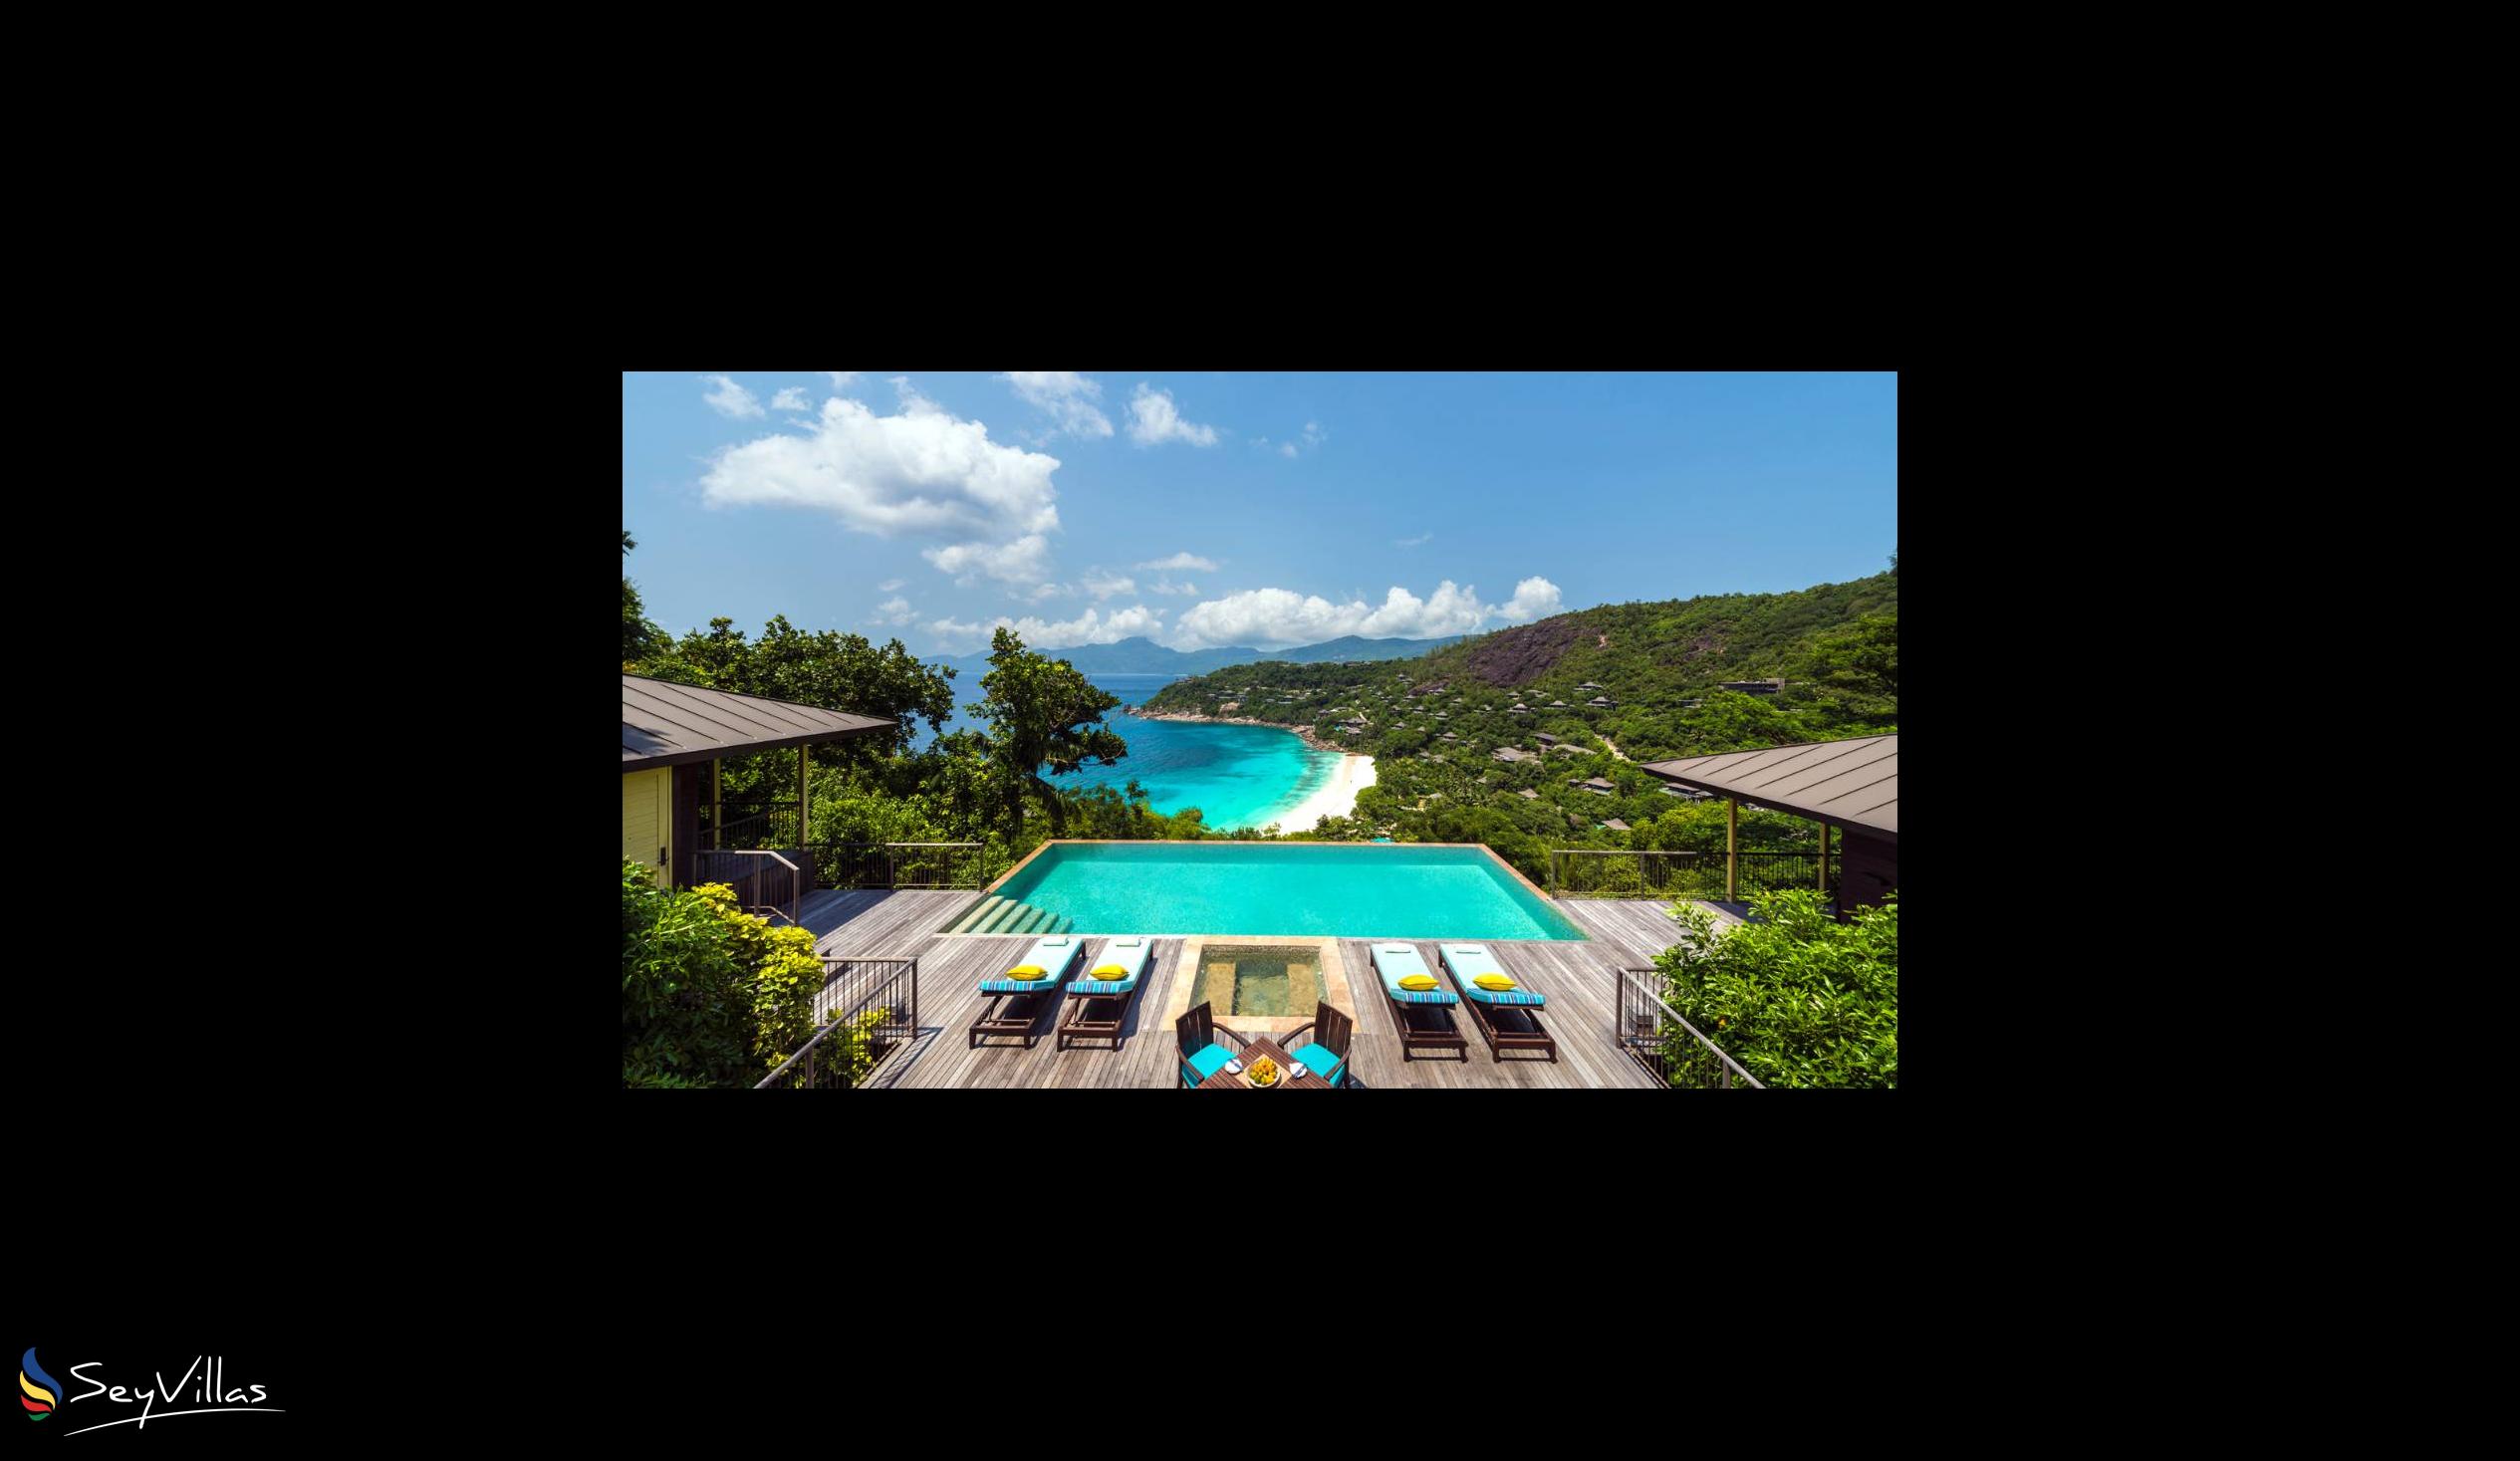 Photo 26: Four Seasons Resort - 2-Bedroom Hilltop Ocean View Suite - Mahé (Seychelles)